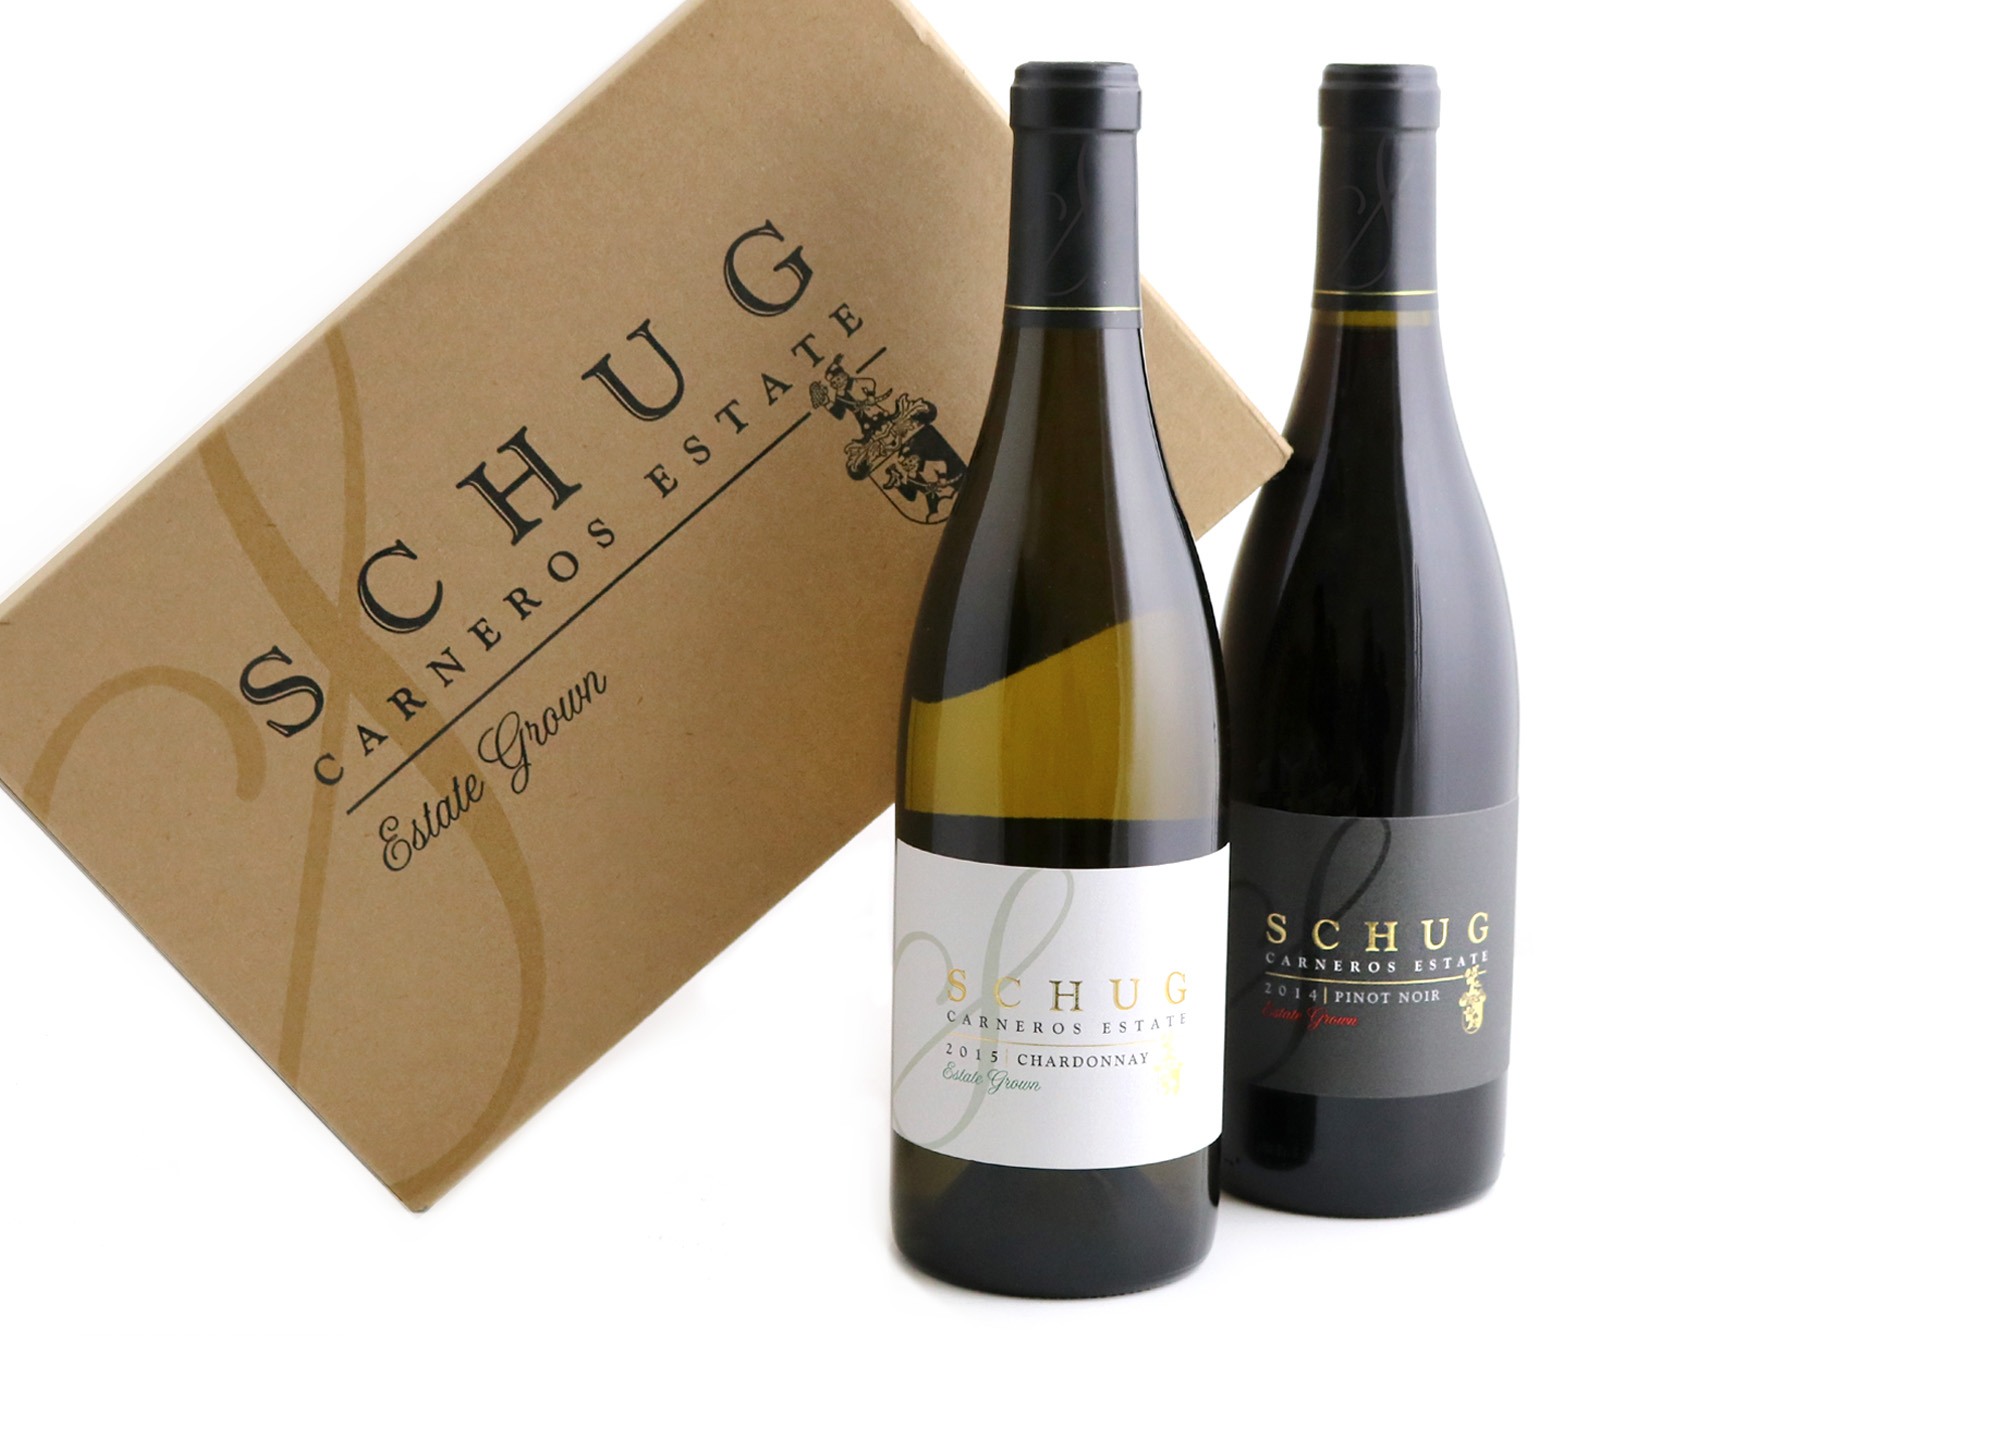 Wines Packaging Label Design of the Schug Label